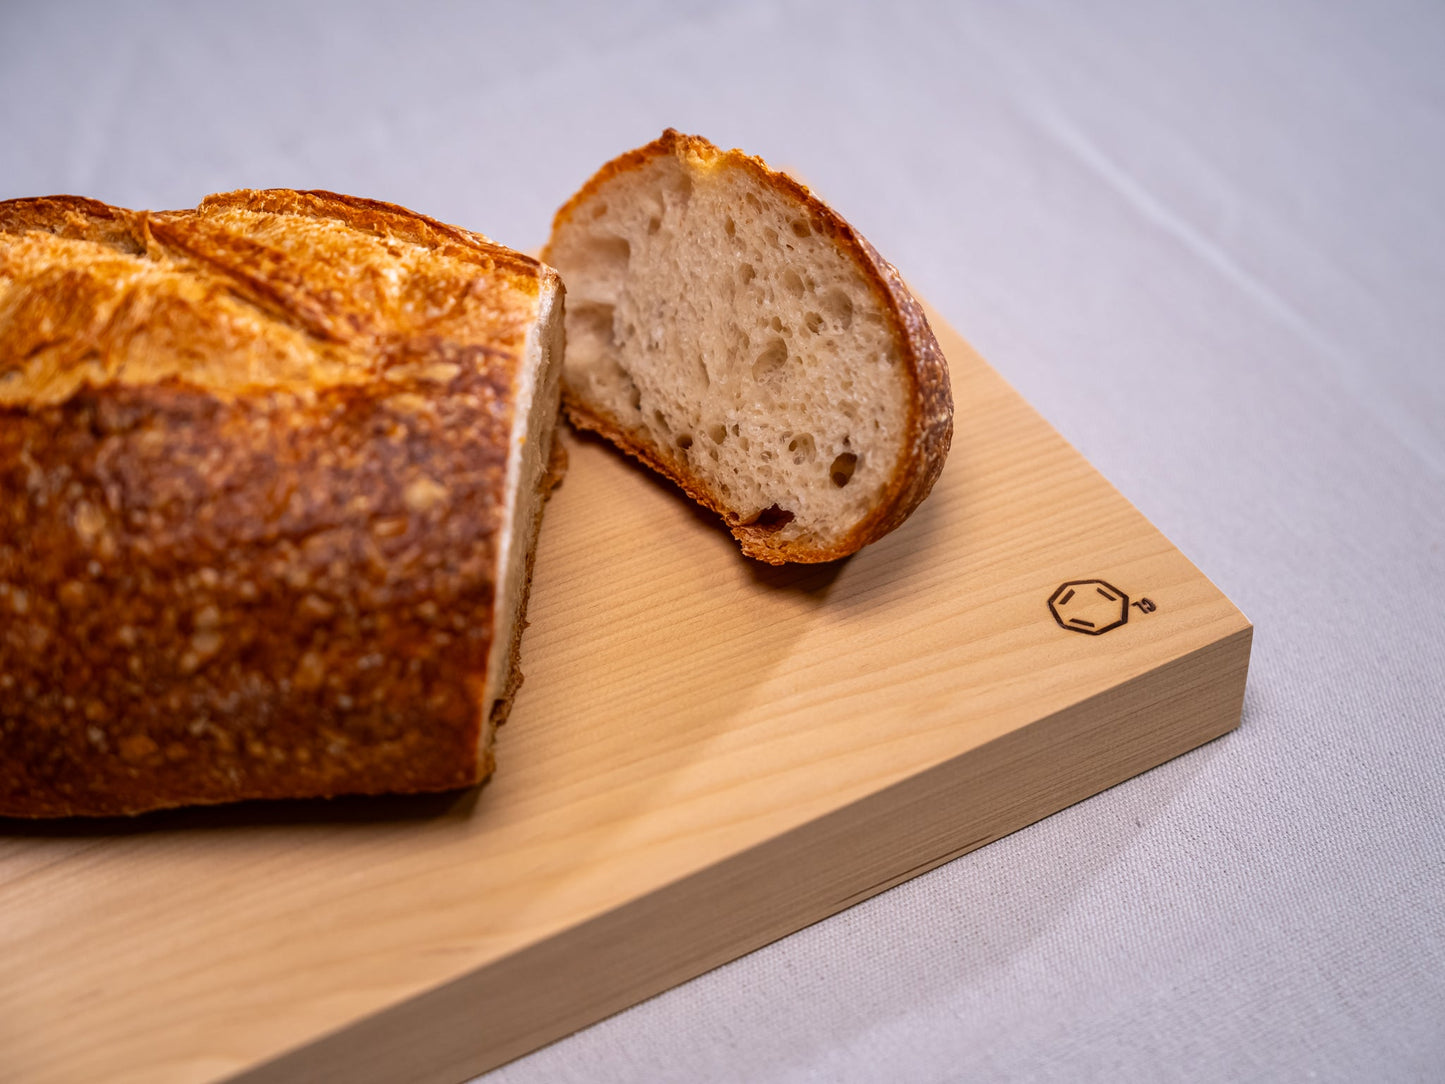 Cul de Sac's hiba wood chopping board with a sliced load of bread